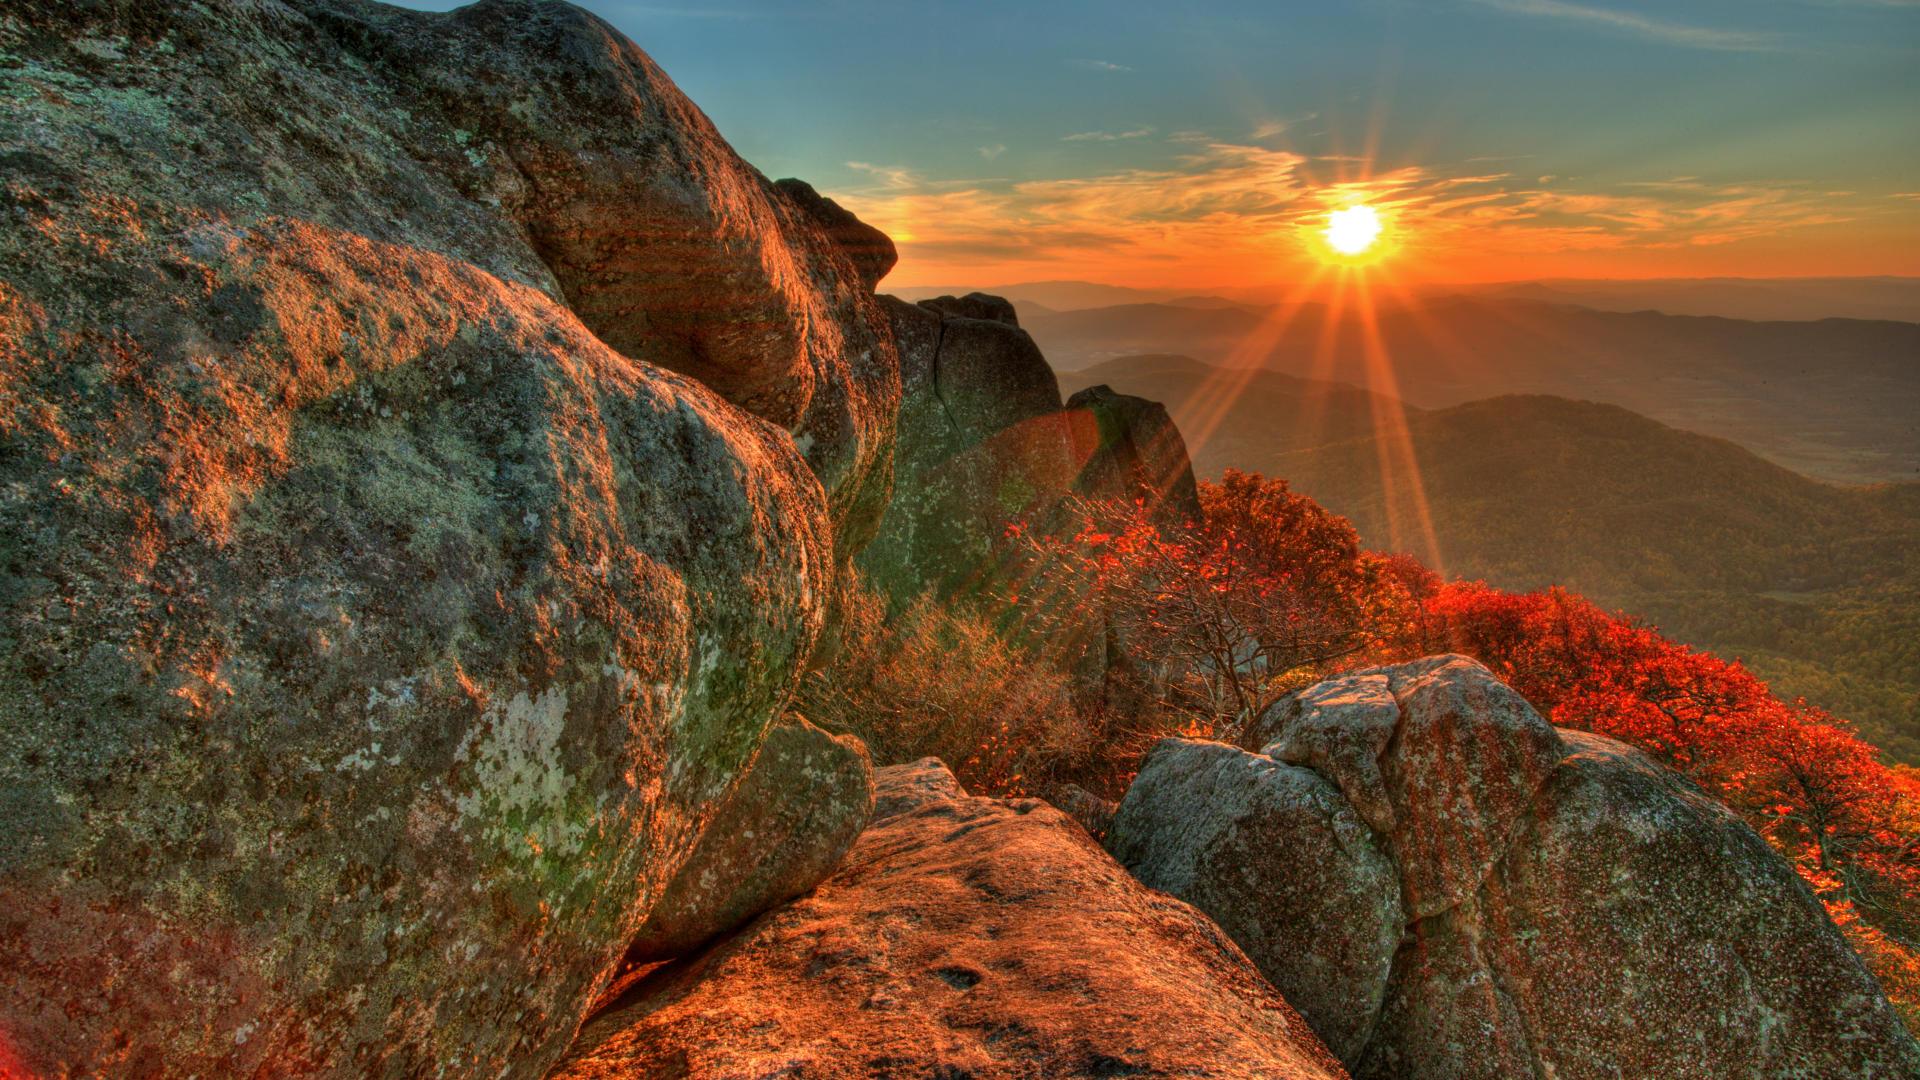 Sunrise. Free Download HD Desktop Wallpaper Background Image